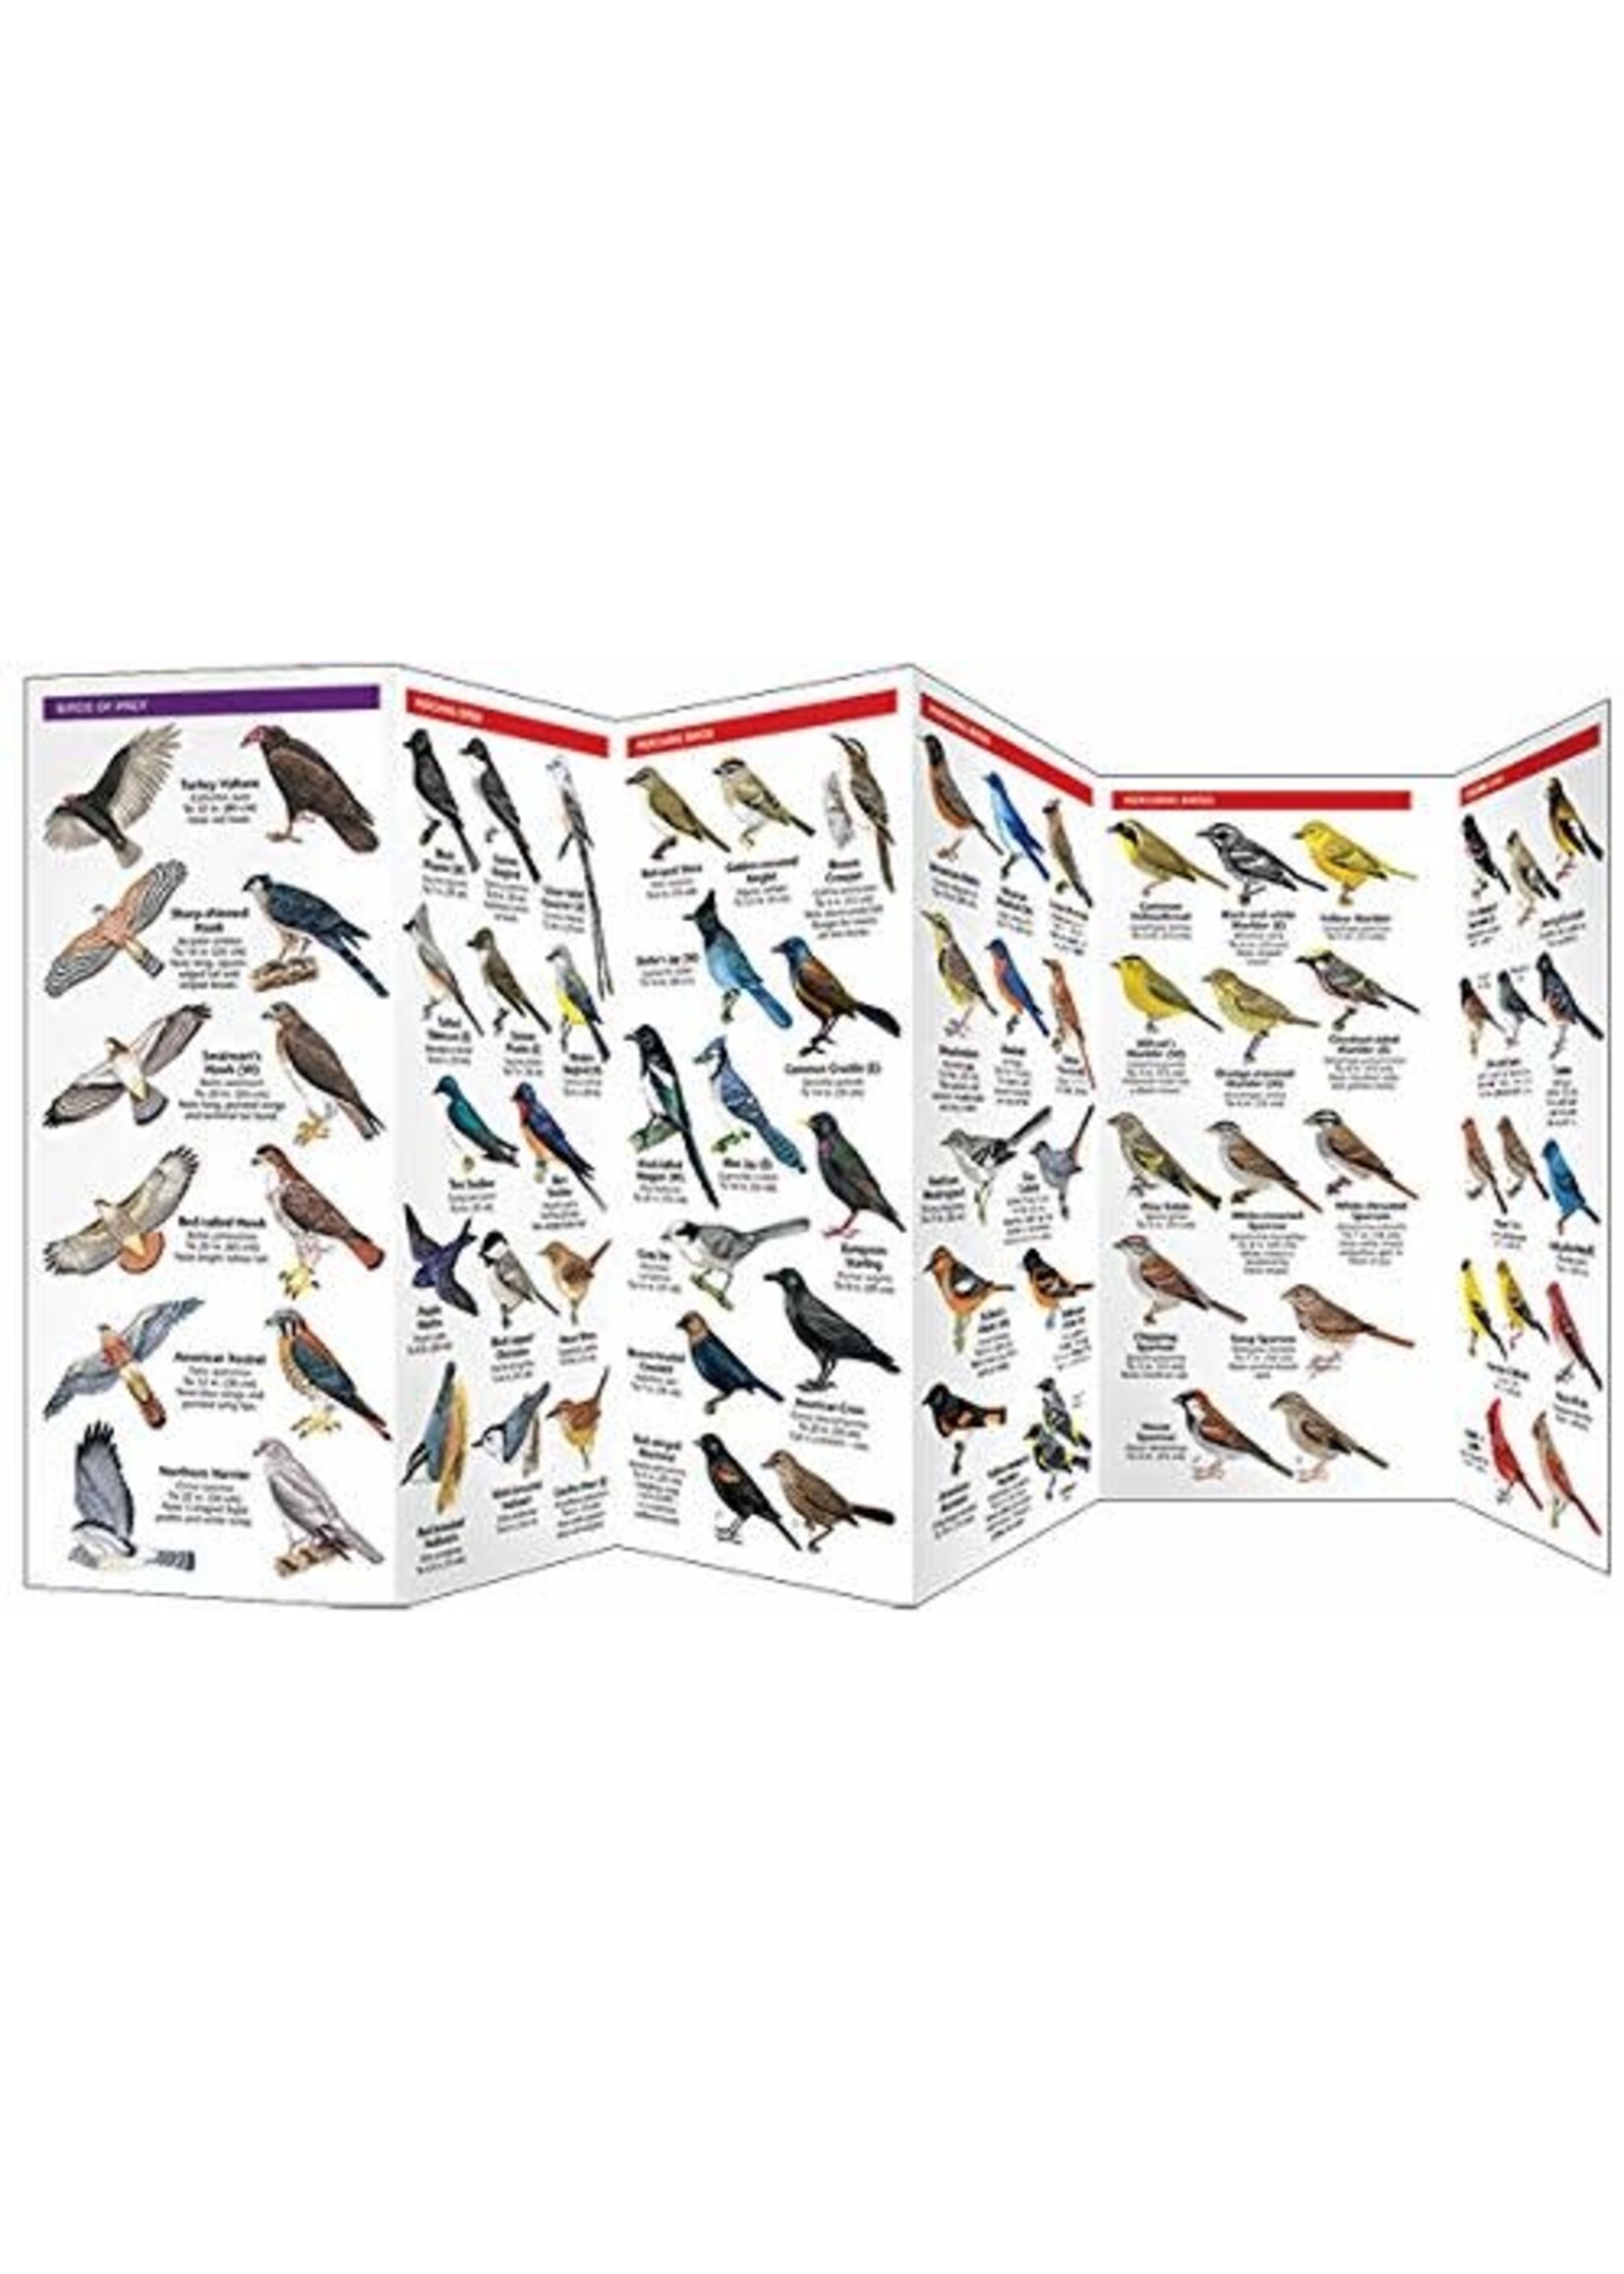 Backyard Birds of North America: A Folding Pocket Guide to Familiar Species